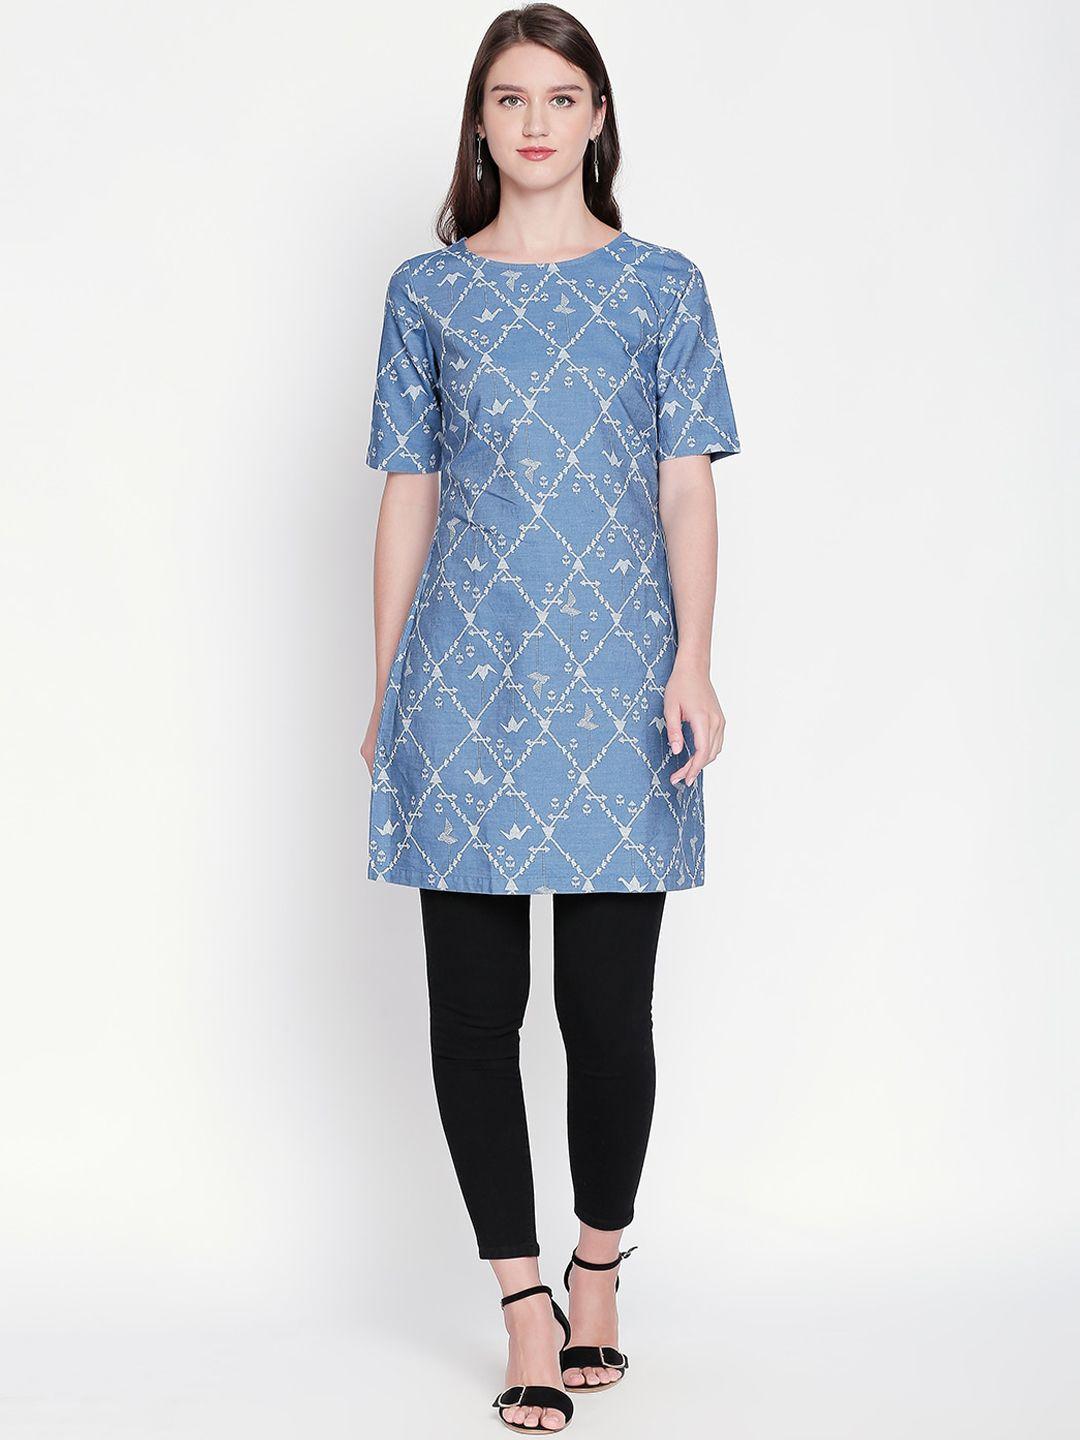 akkriti by pantaloons women blue geometric printed kurta